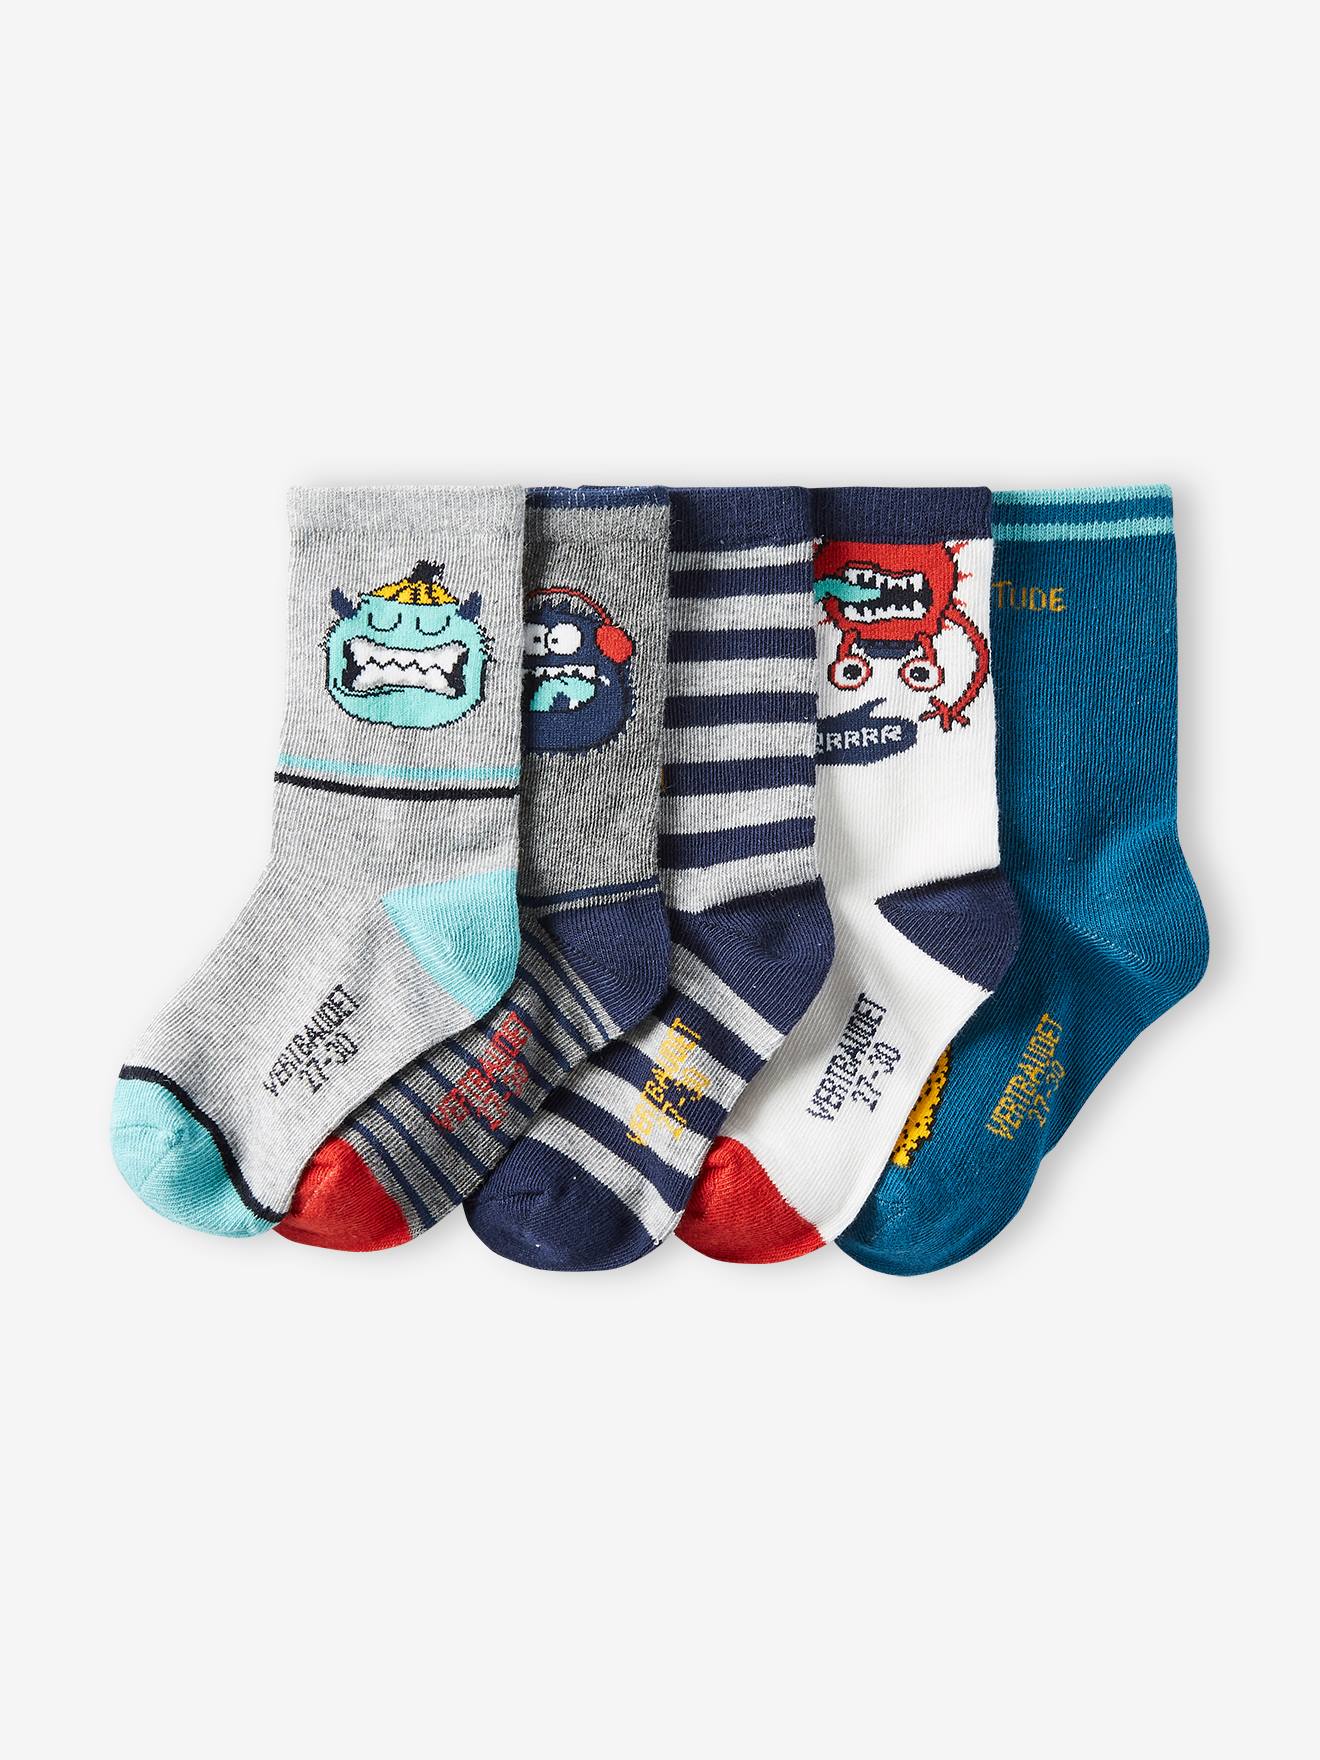 Pack of 5 Pairs of "Monster" Socks for Boys green medium 2 color/multicolr